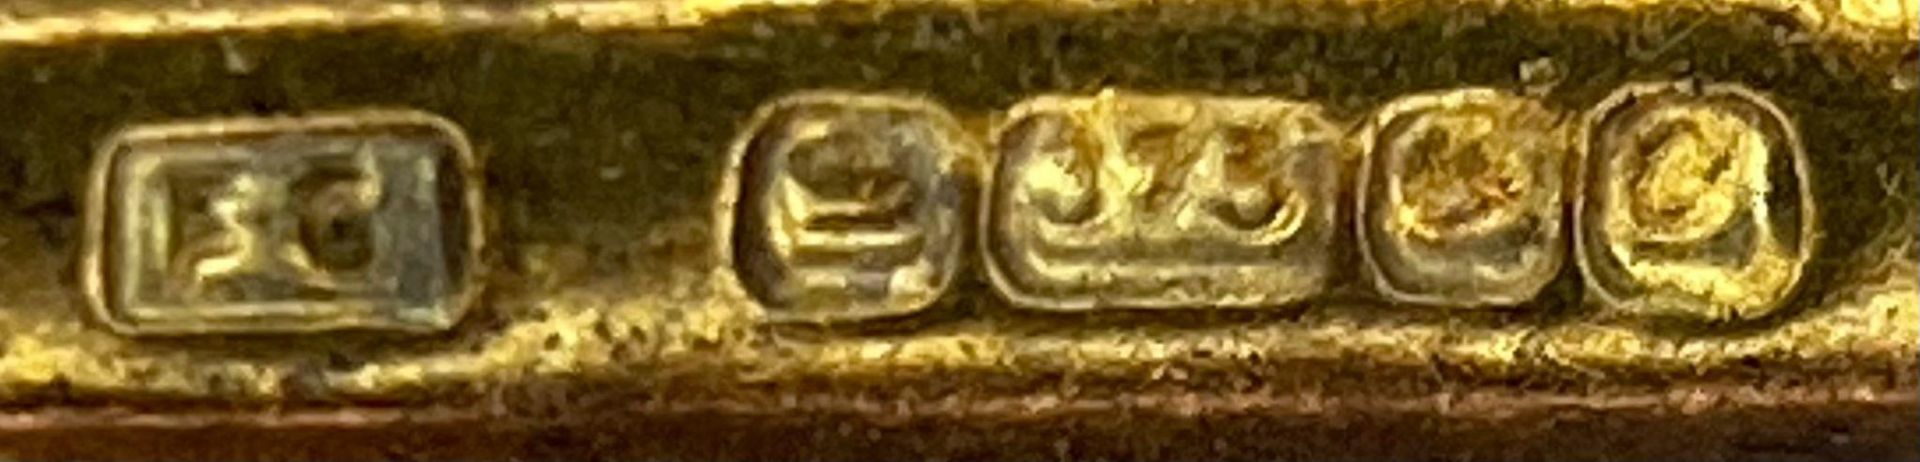 A 9K YELLOW GOLD CONCORDE AEROPLANE CHARM / PENDANT. 1.9G. - Image 6 of 6